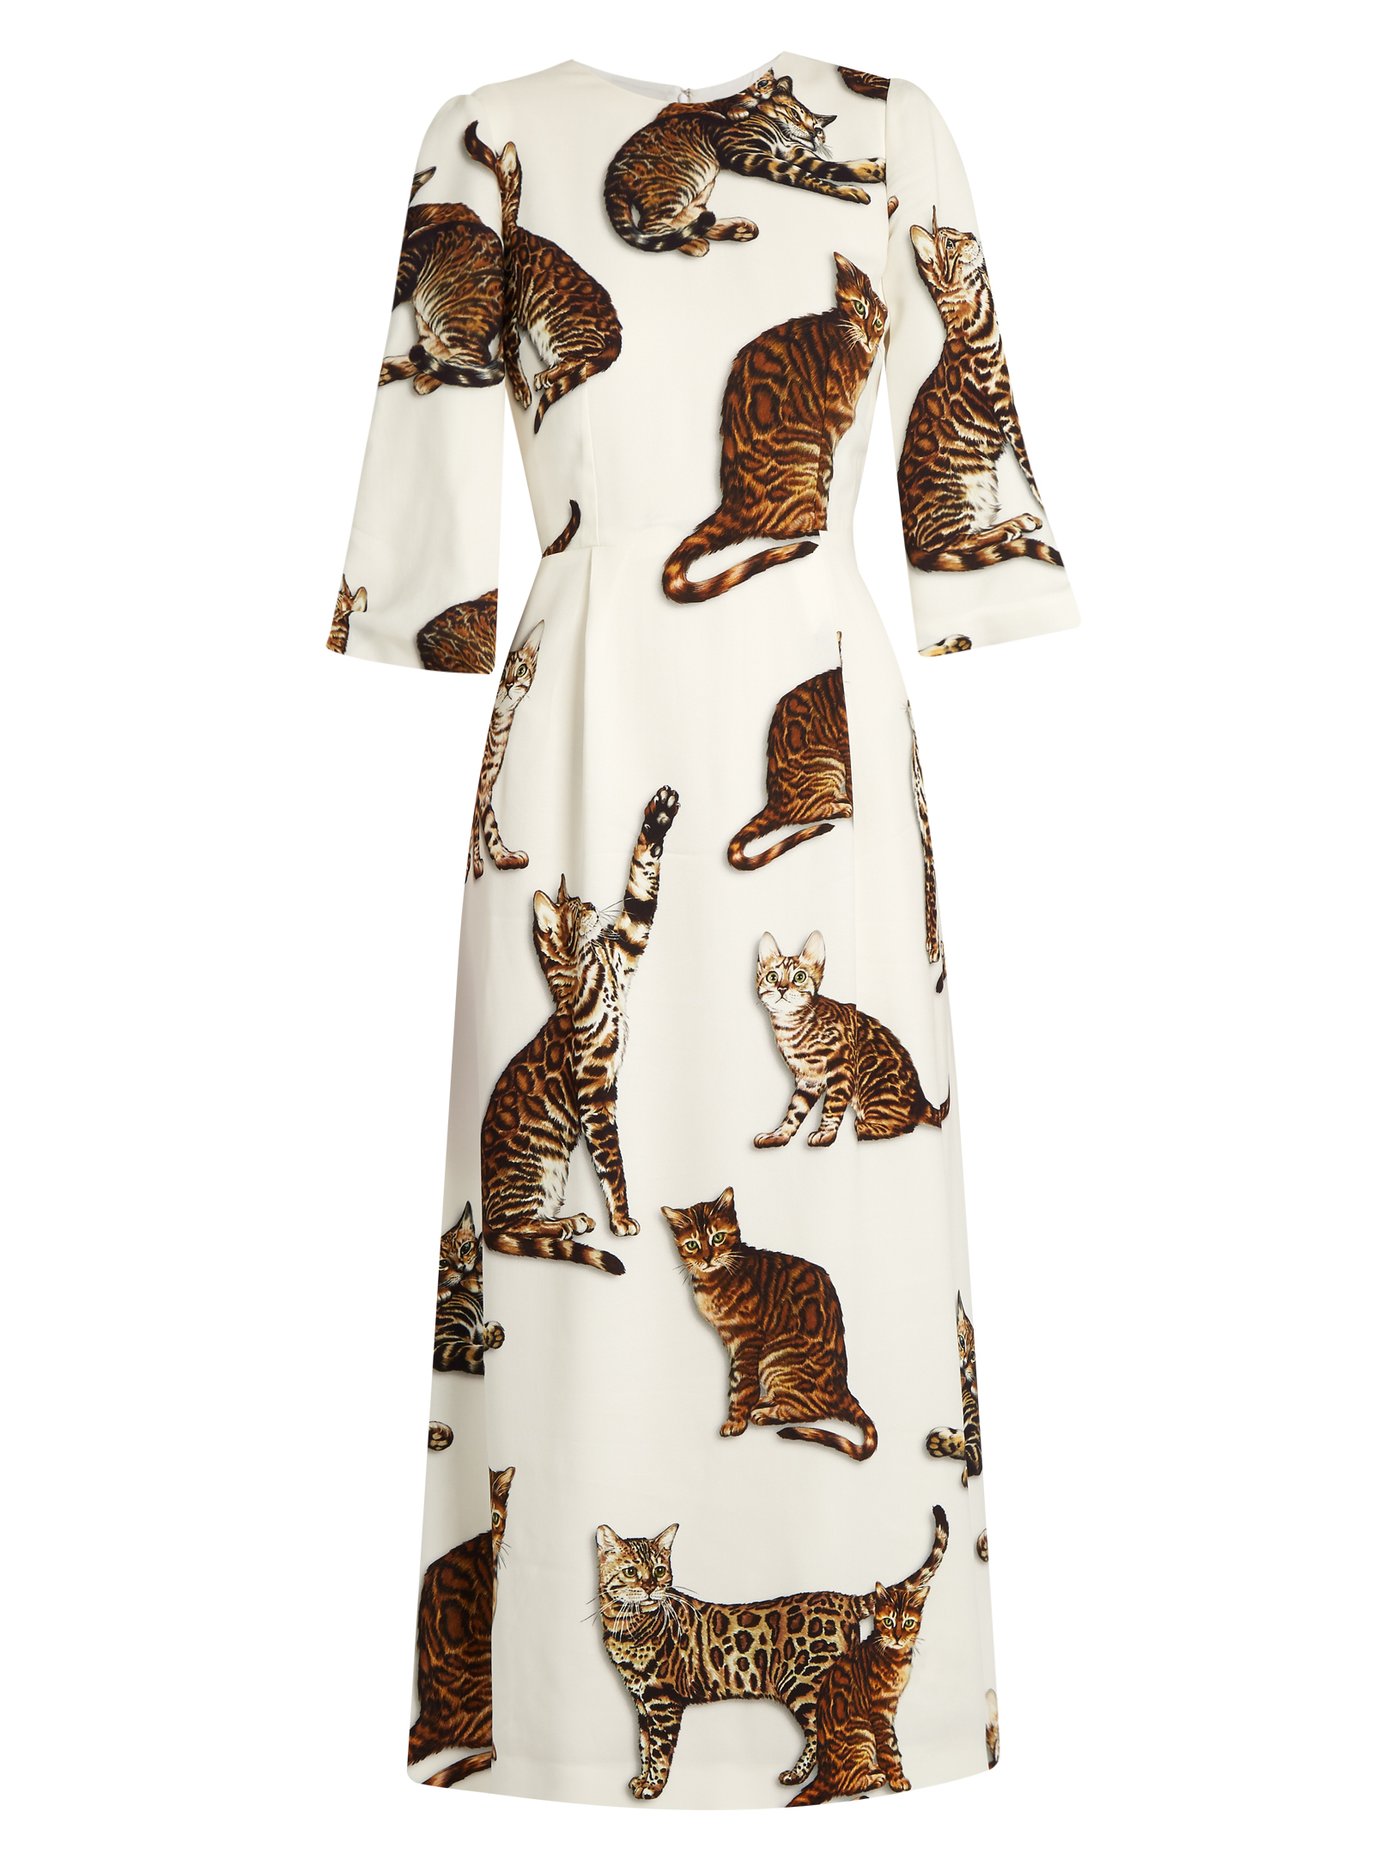 dolce and gabbana cat dress